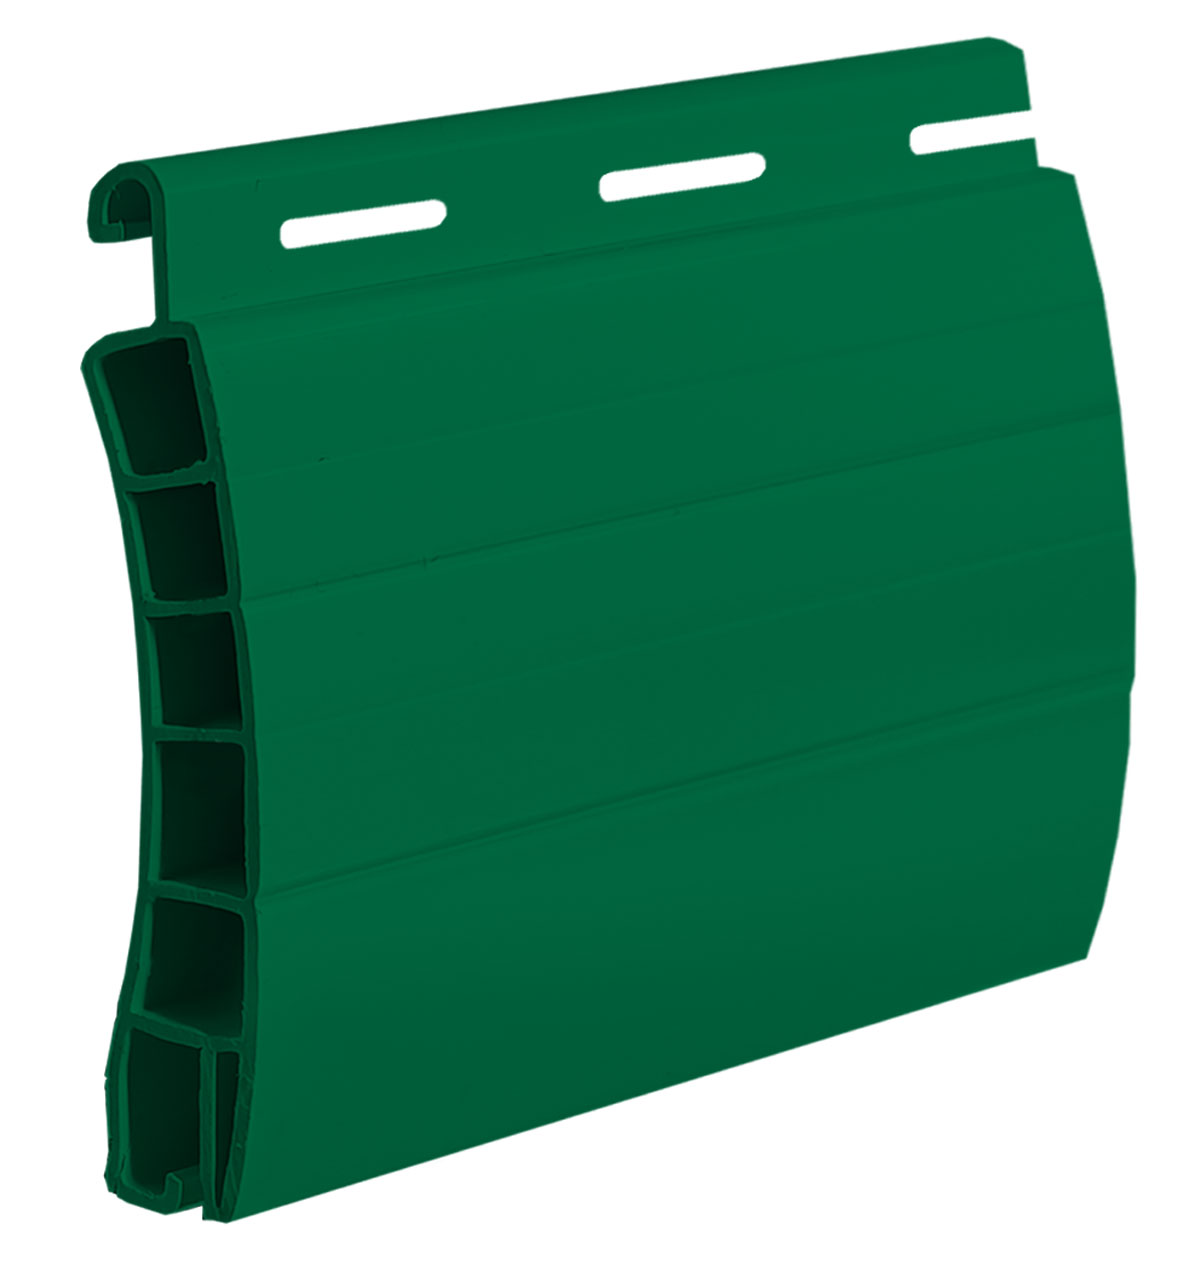  35 Verde Bandiera - Avvolgibile PVC - FIBREGLASS